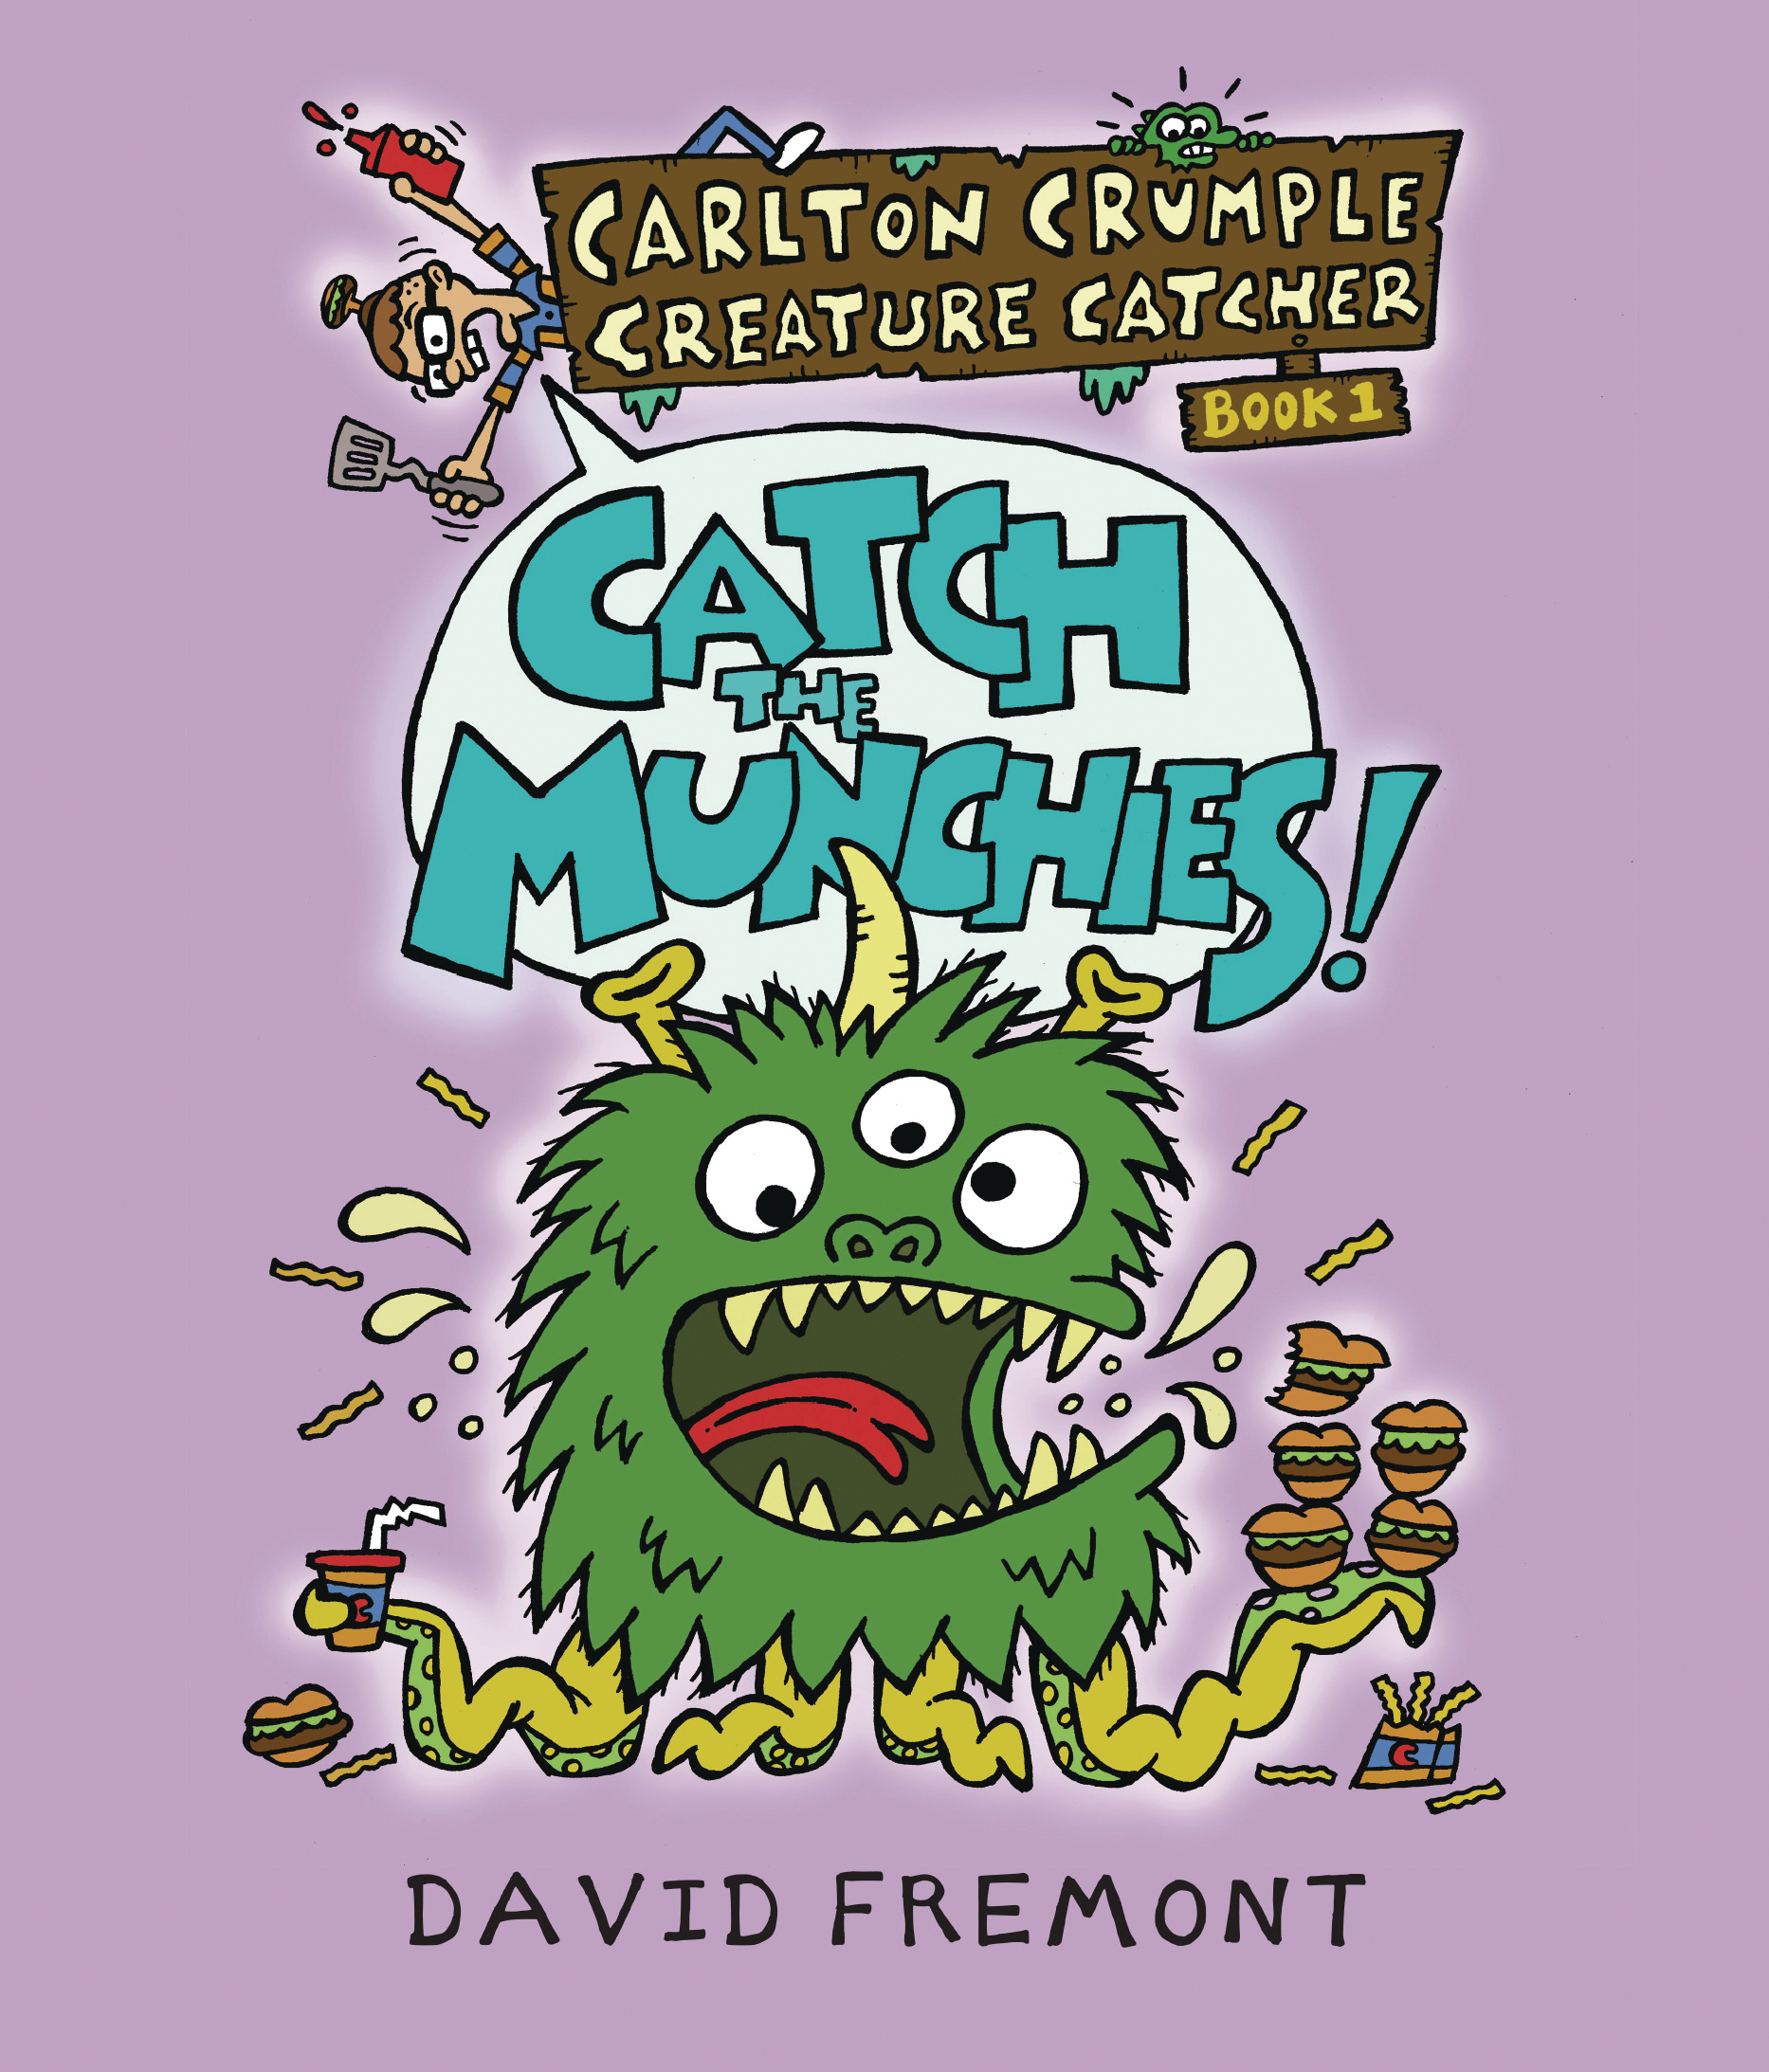 Carlton Crumple Creature Catcher Ya Graphic Novel #1 Catch The Munchies